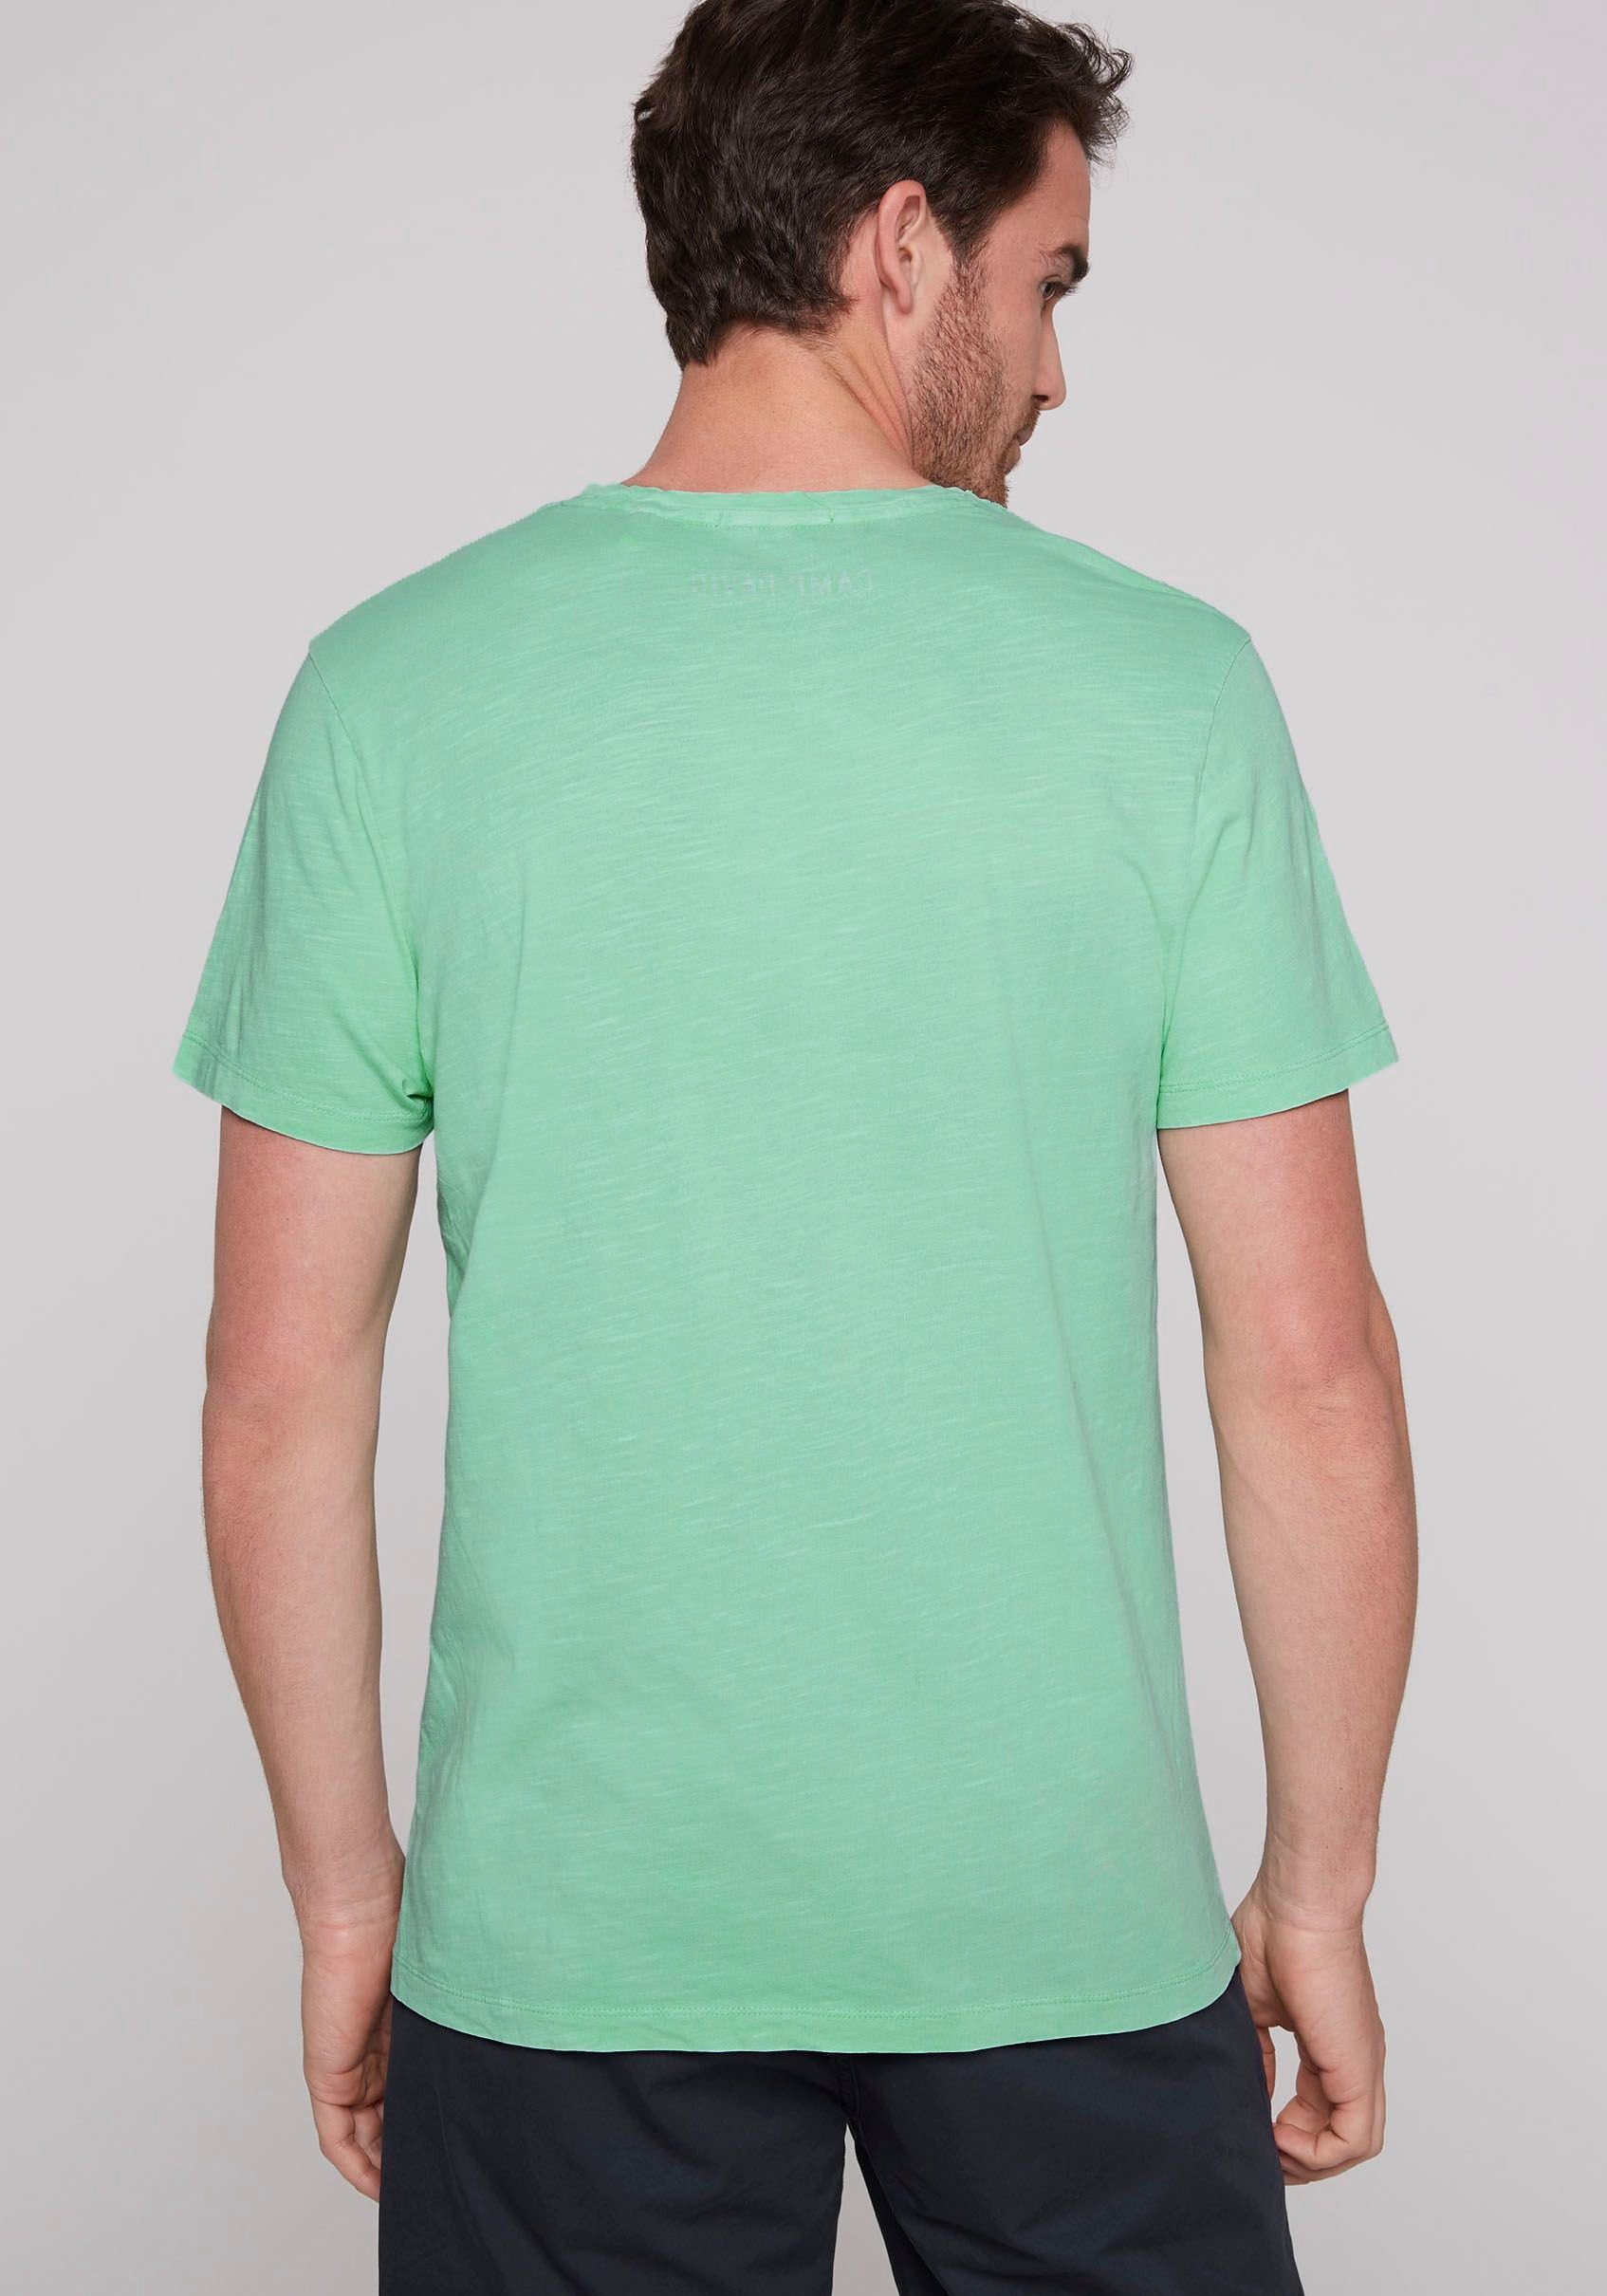 CAMP DAVID T-Shirt nordic green Logoprägung mit